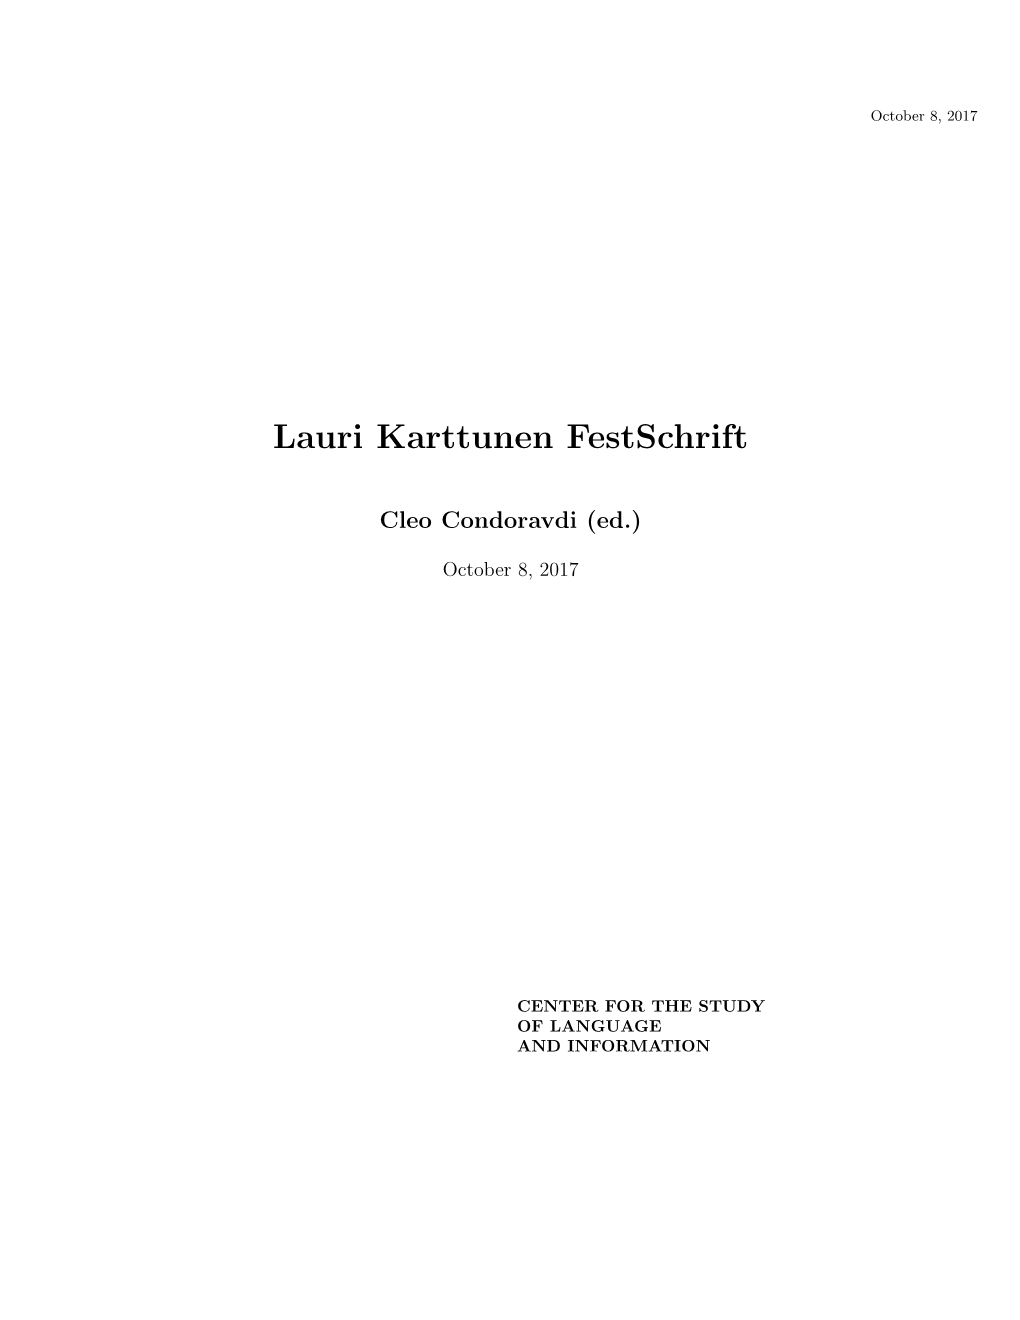 Lauri Karttunen Festschrift